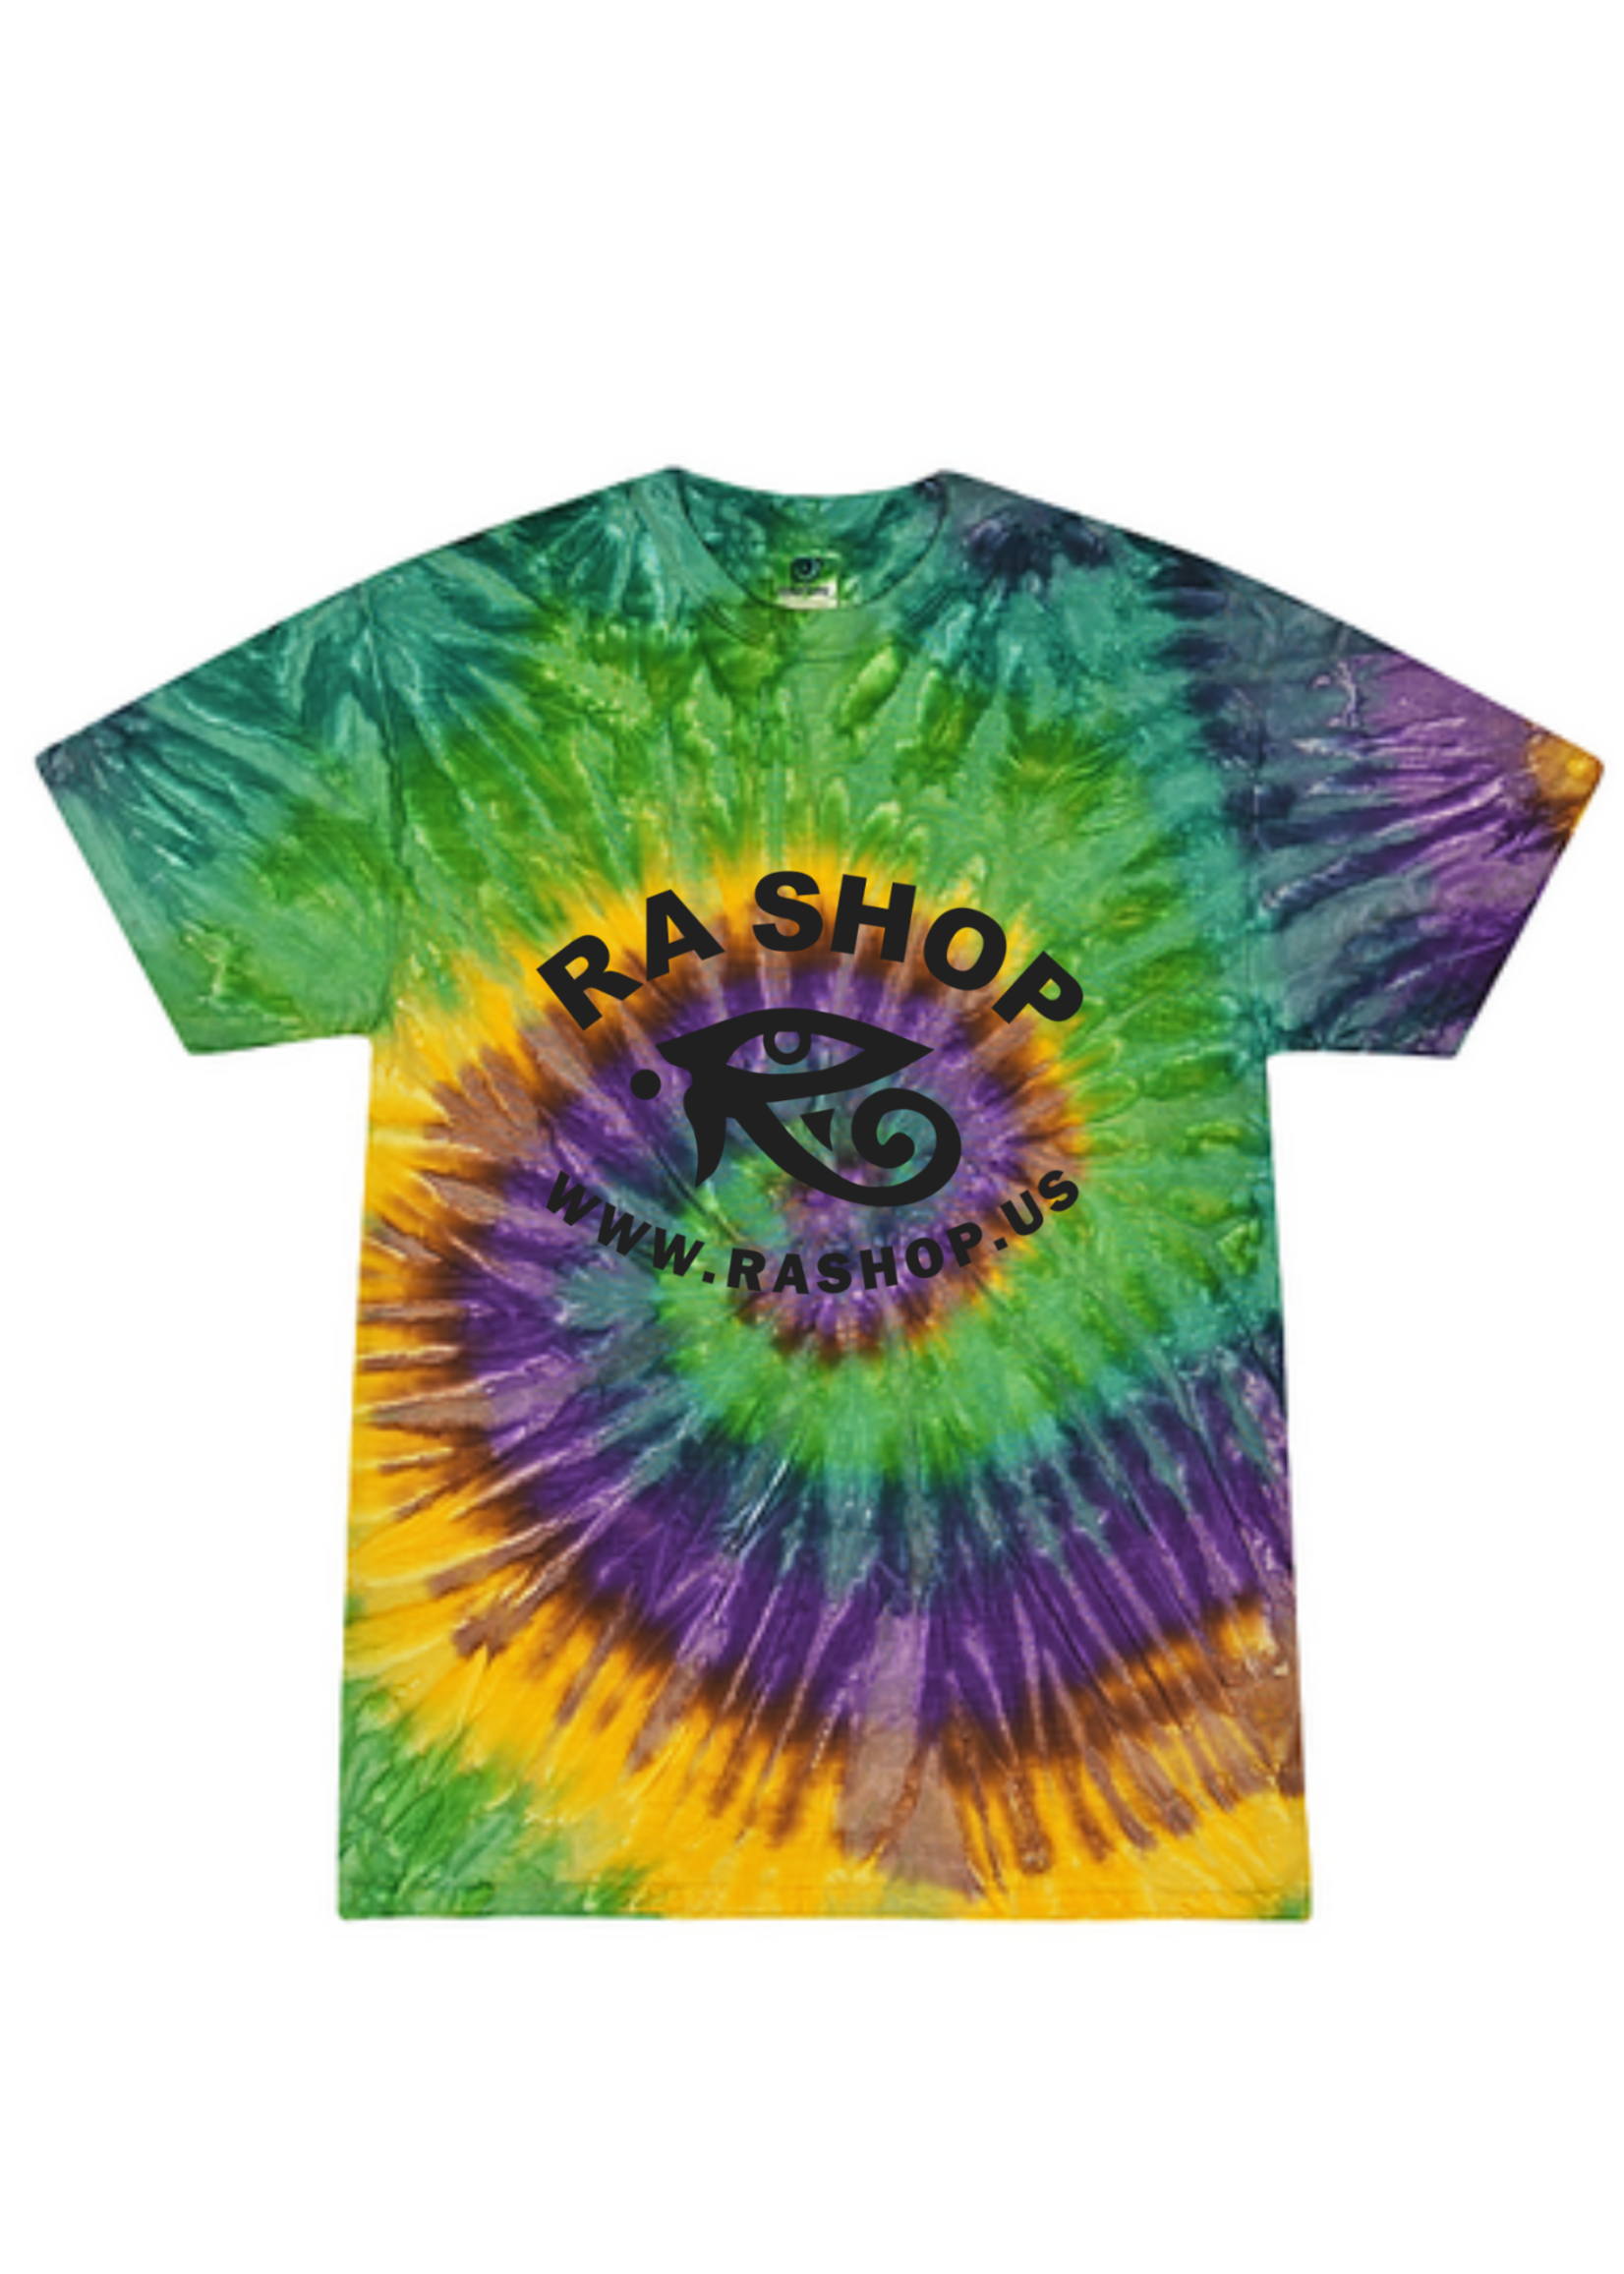 Ra Shop Tie Dye T-Shirt Mardi Gras Lg